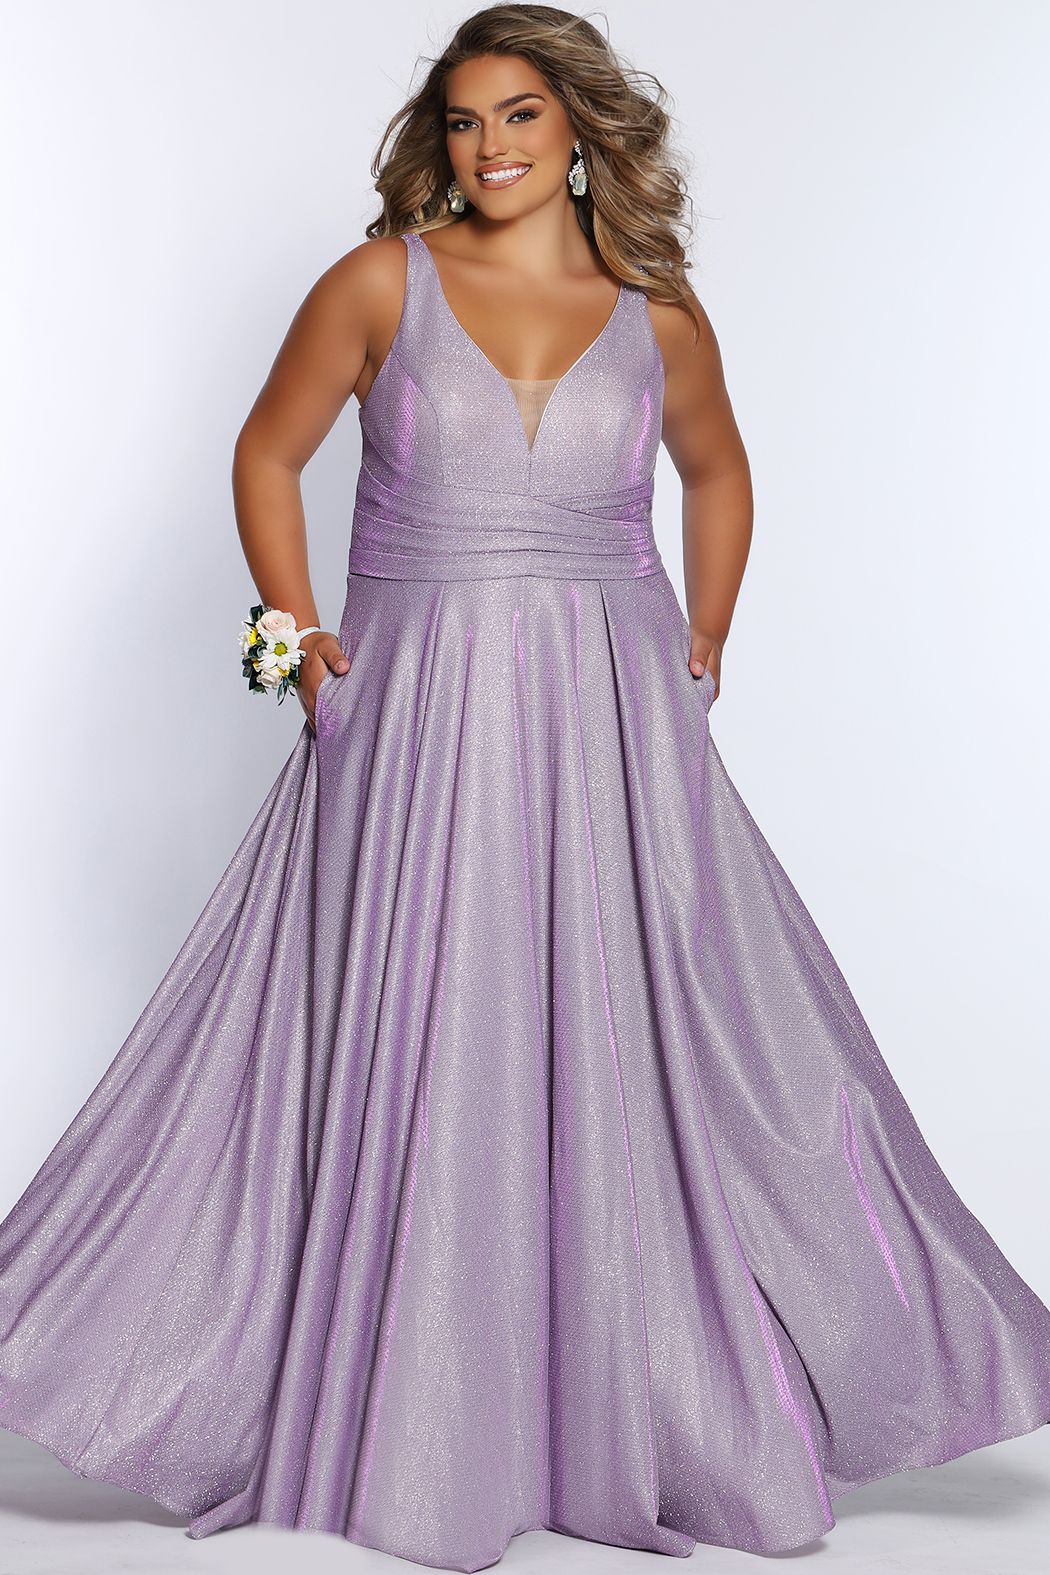 Sydney's Closet SC7324 Size 24 Sage Metallic Prom Dress A Line V Neckline Plus Sized SC 7324